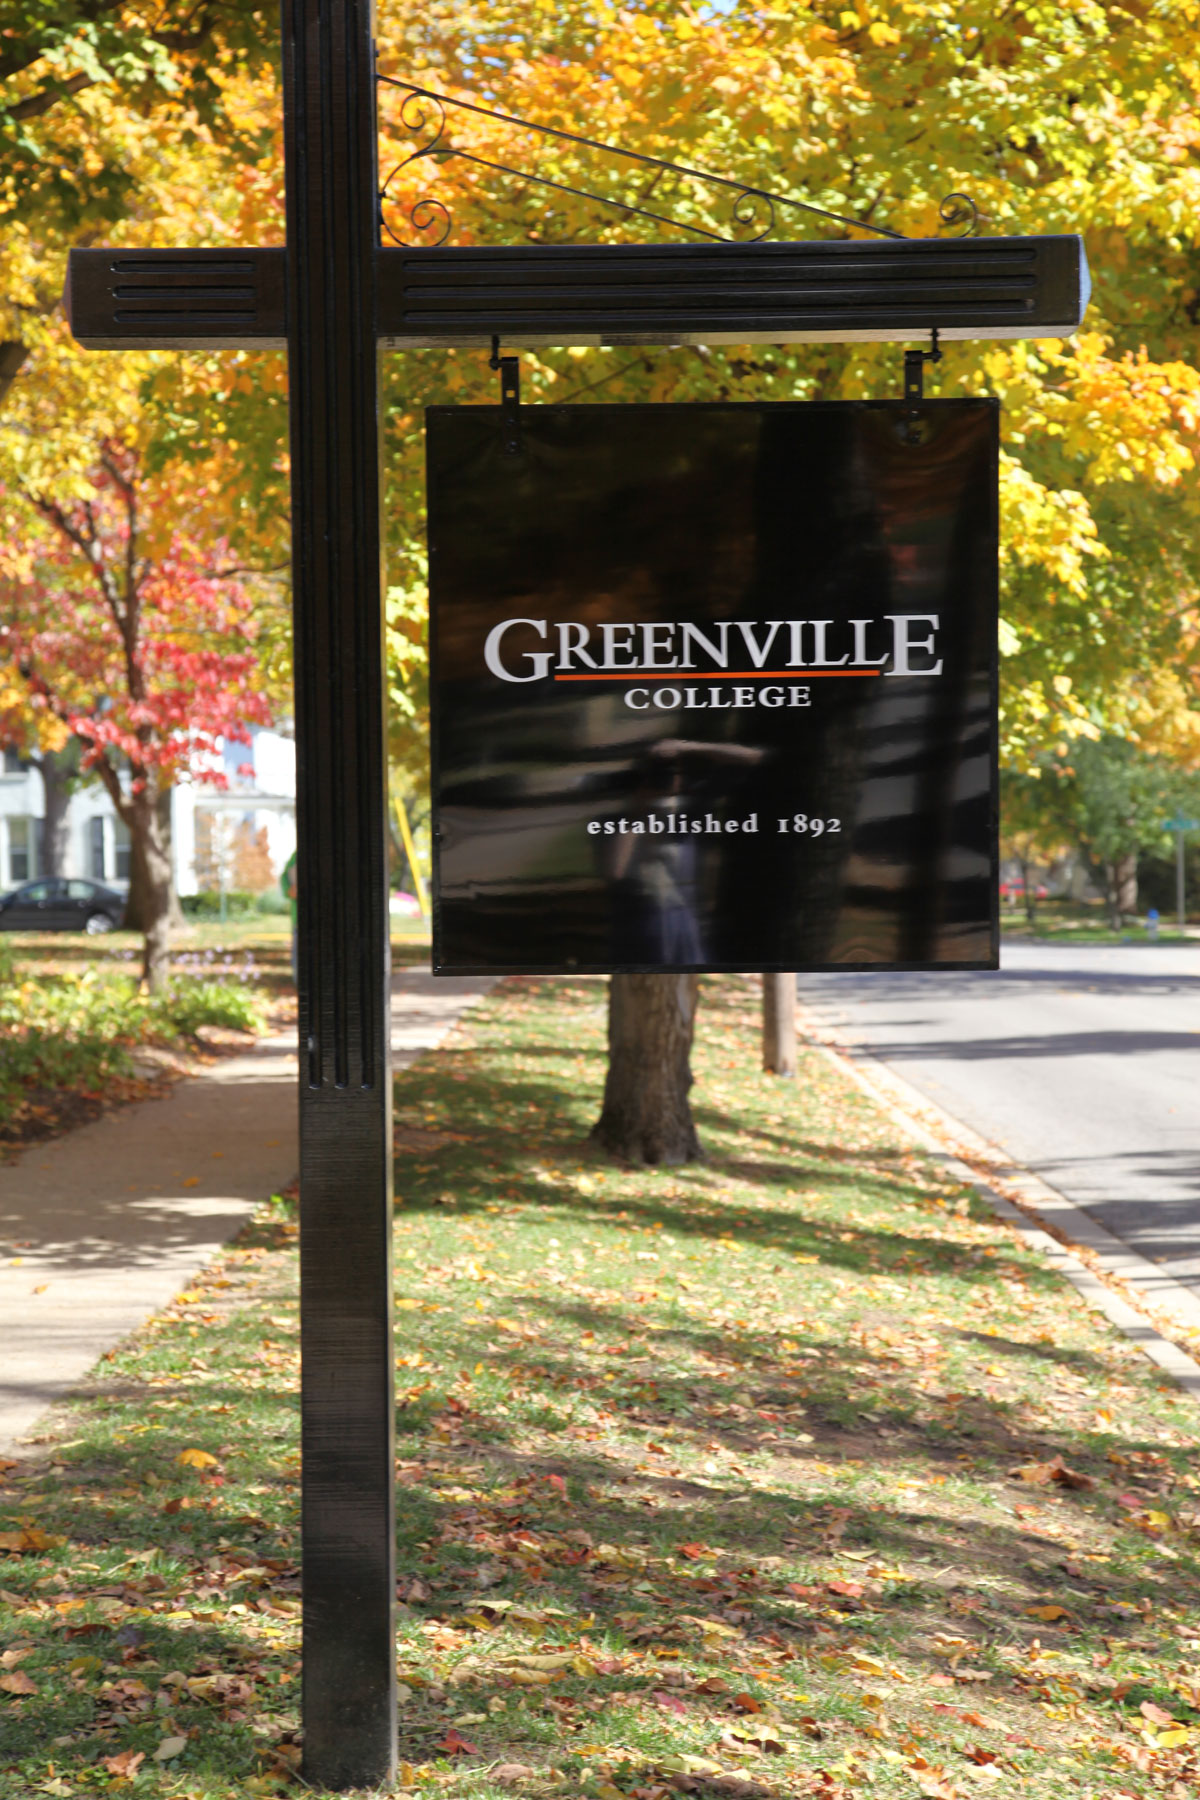 Greenville Chamber of Commerce